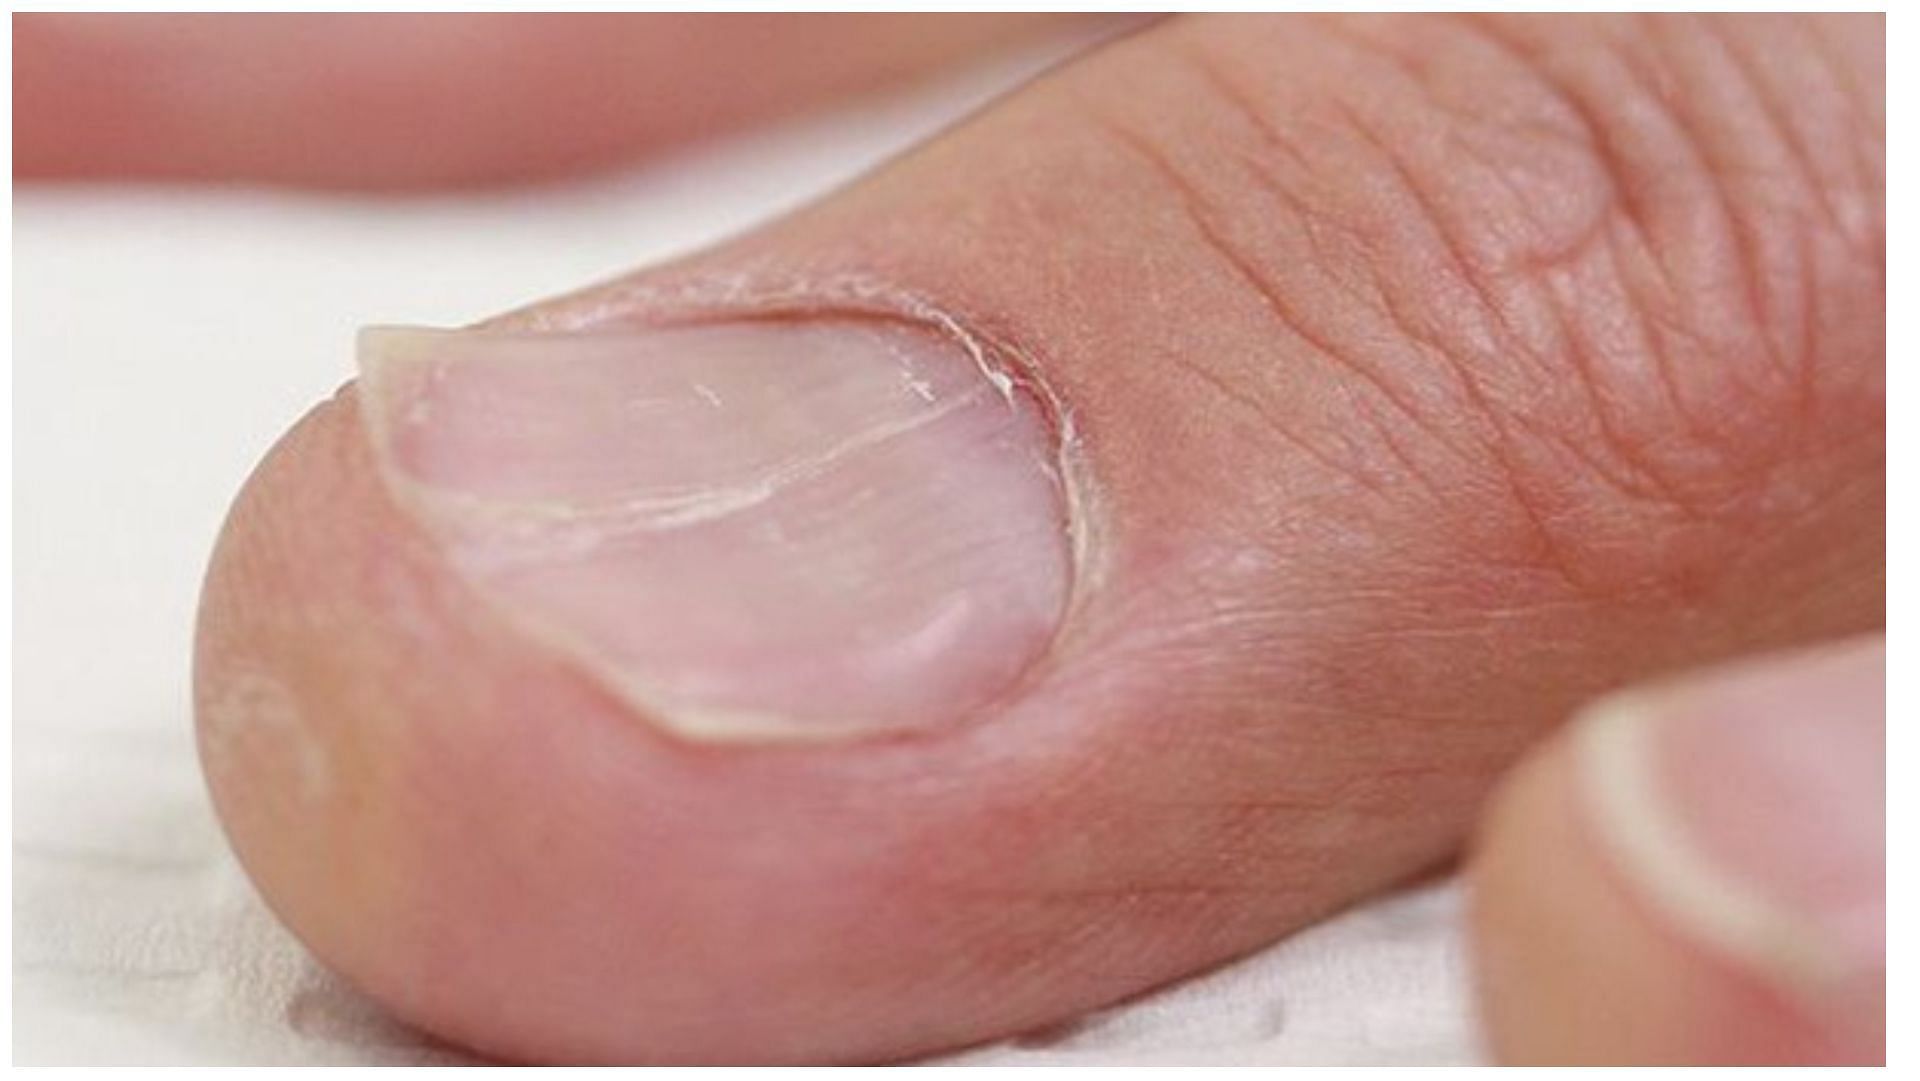 Pin by jen metz on Anatomy | Nail health signs, Nail health, Fingernail  health